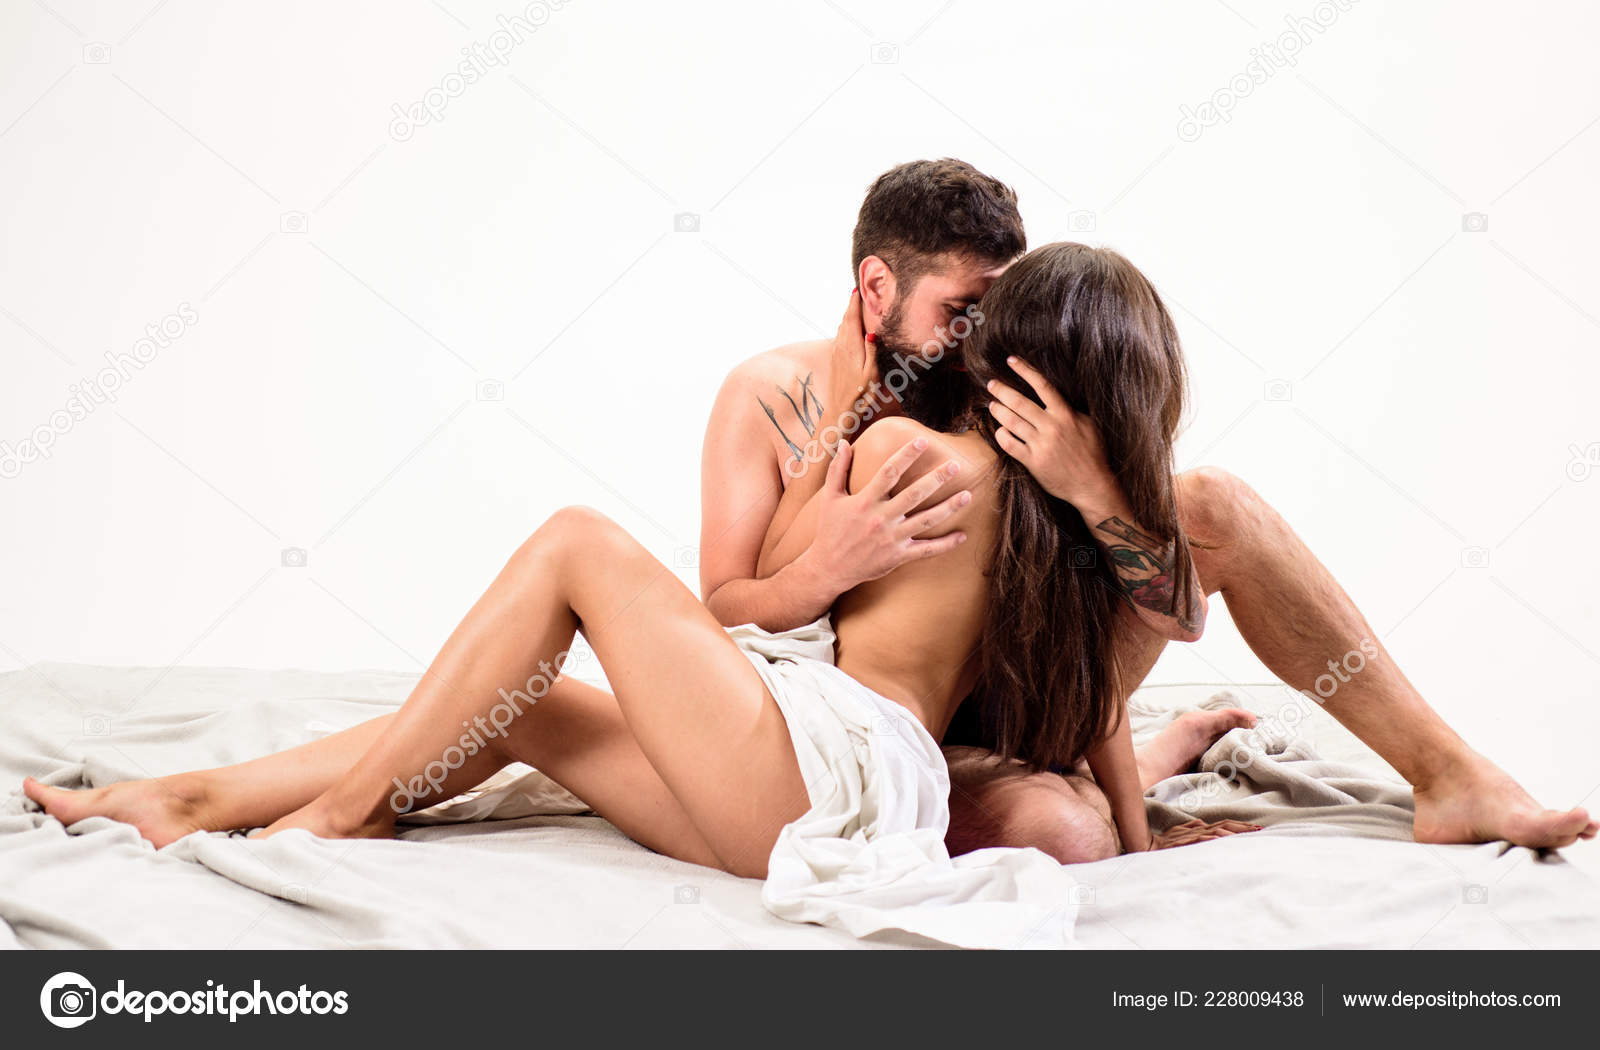 Coulple cuddling naked